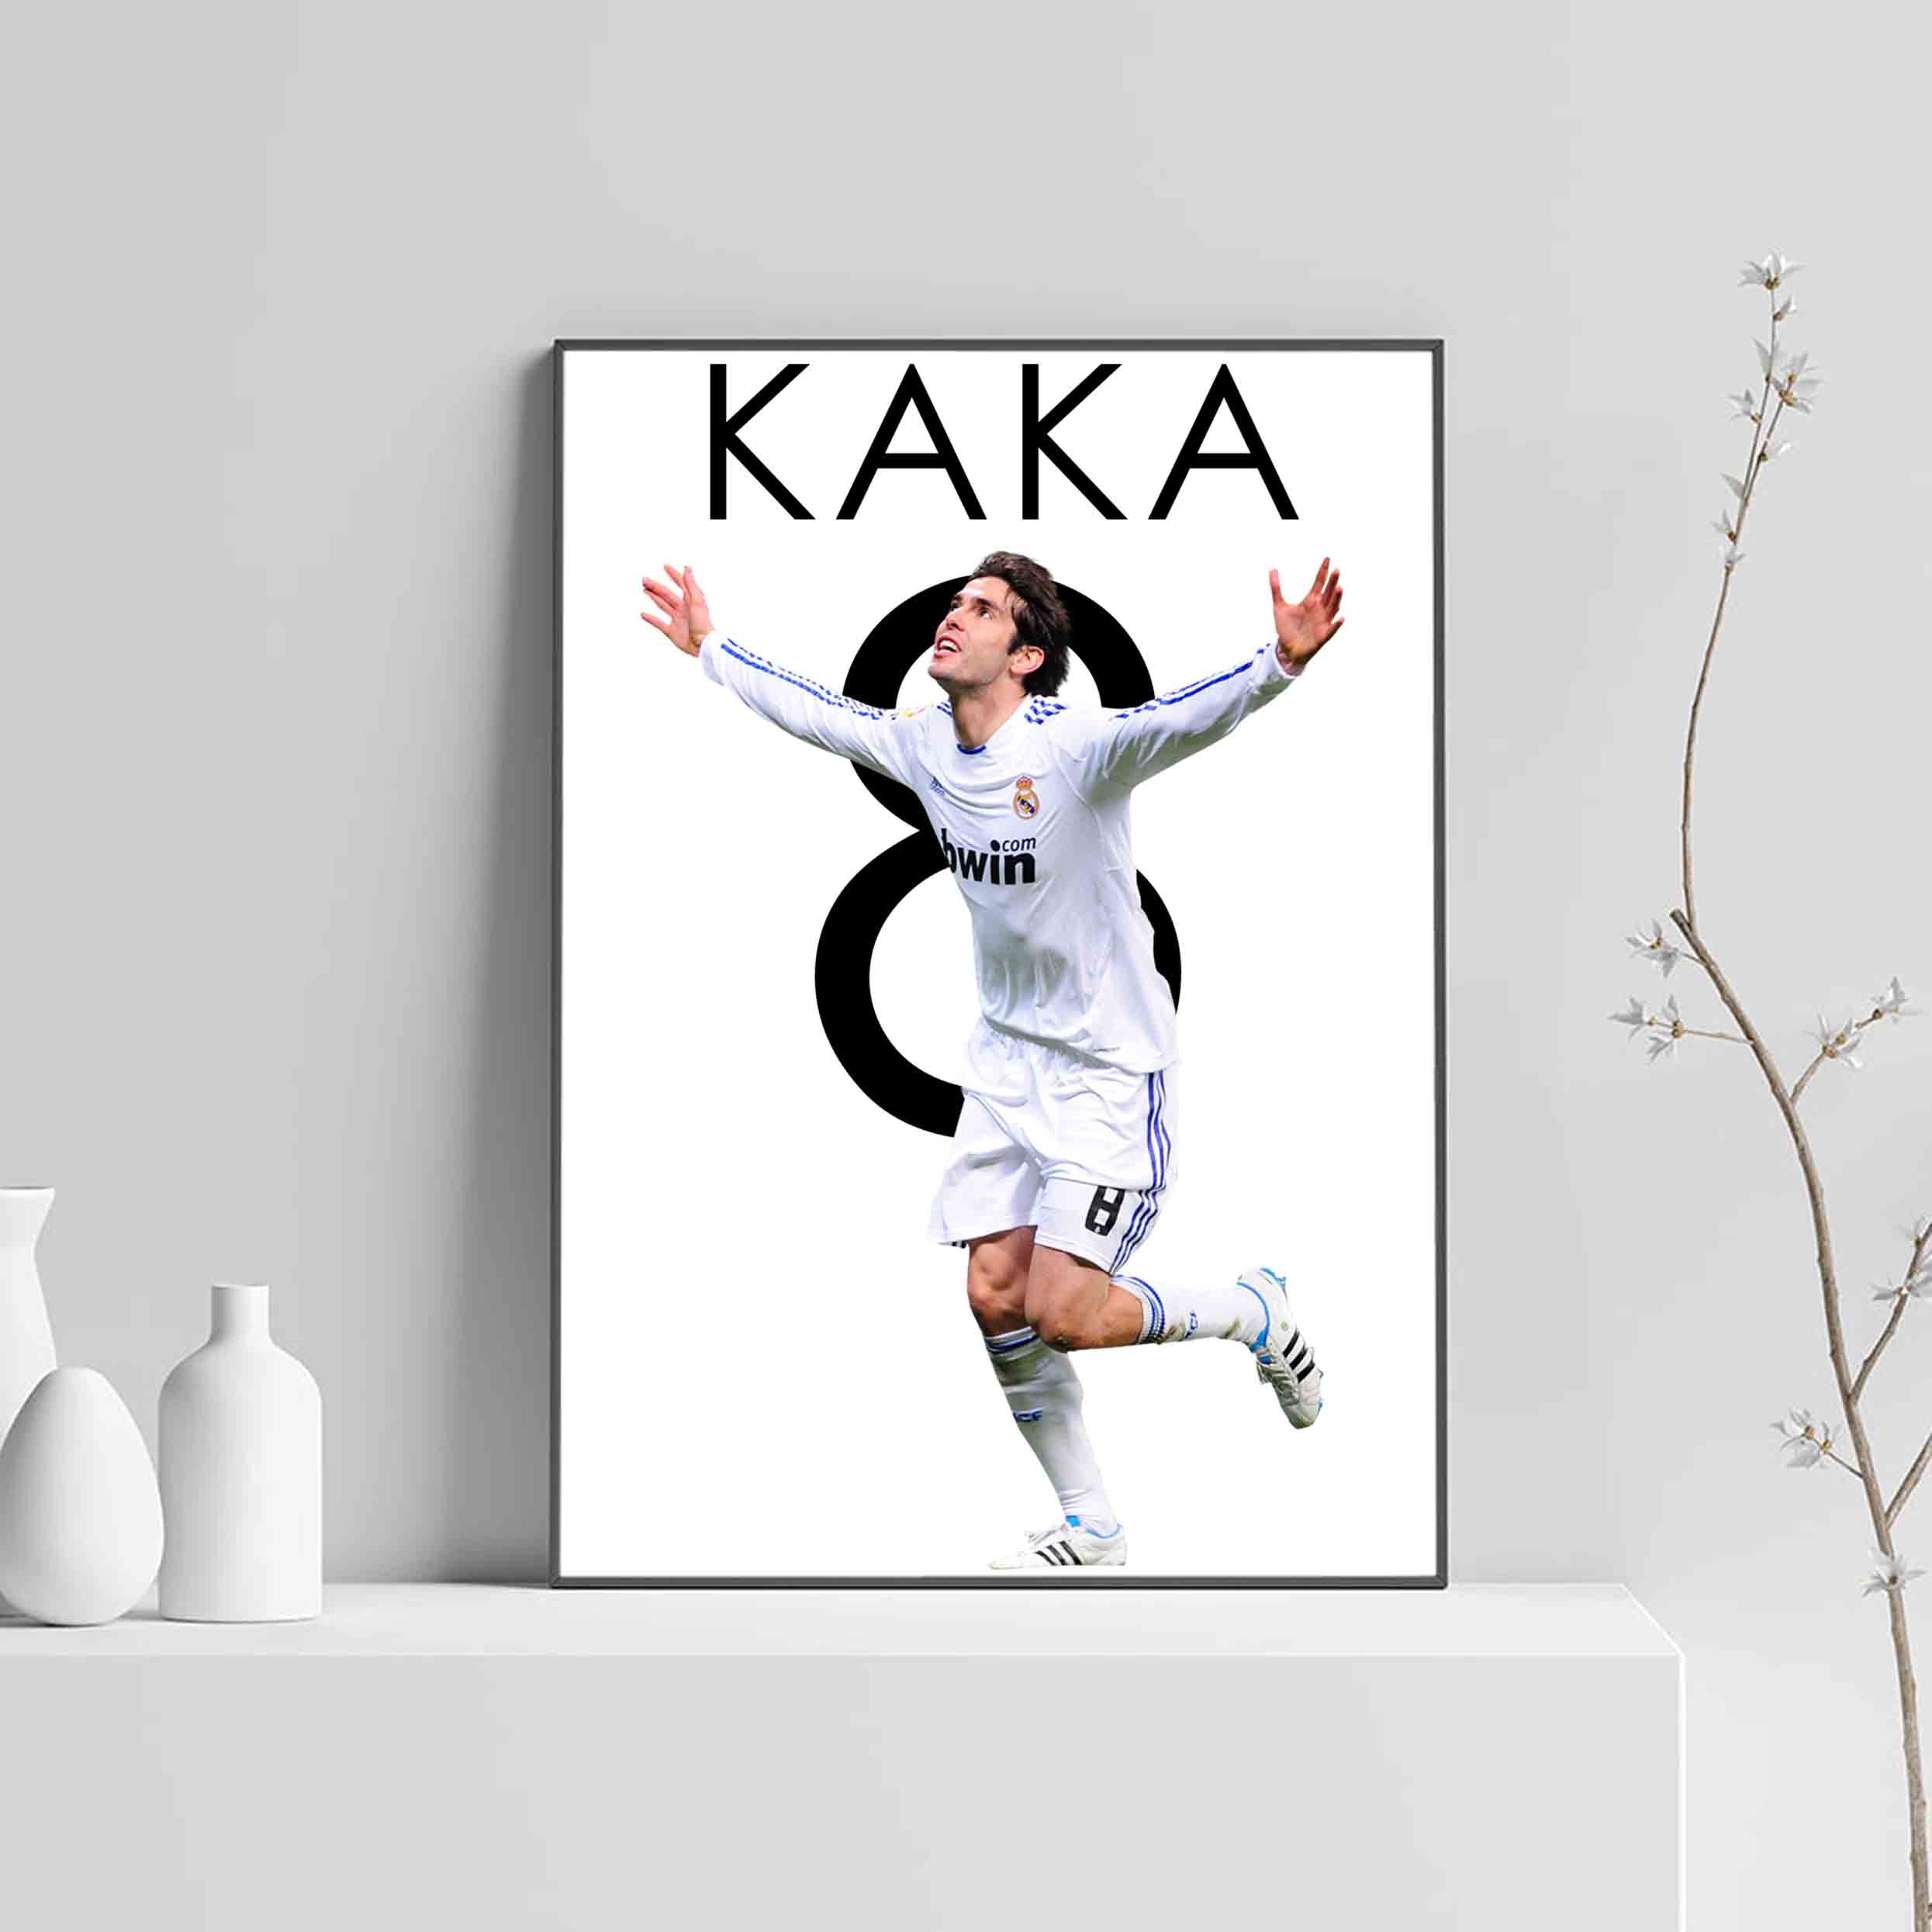 Ricardo Kaka 8 Real Madrid Poster AcTees Store